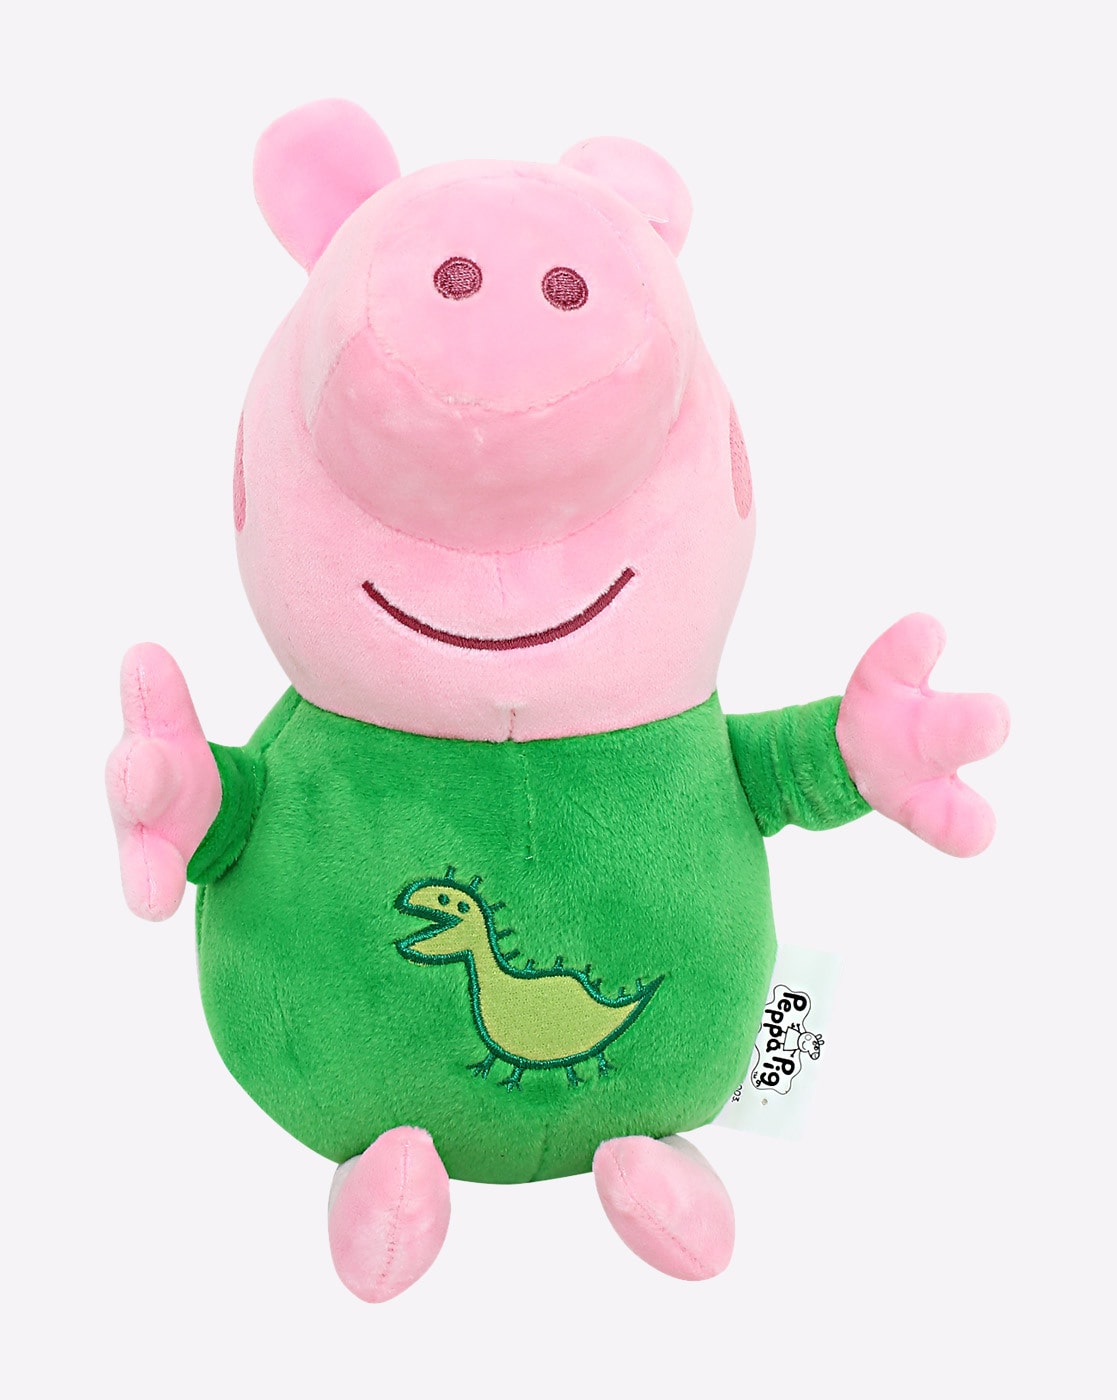 peppa pig soft toy set